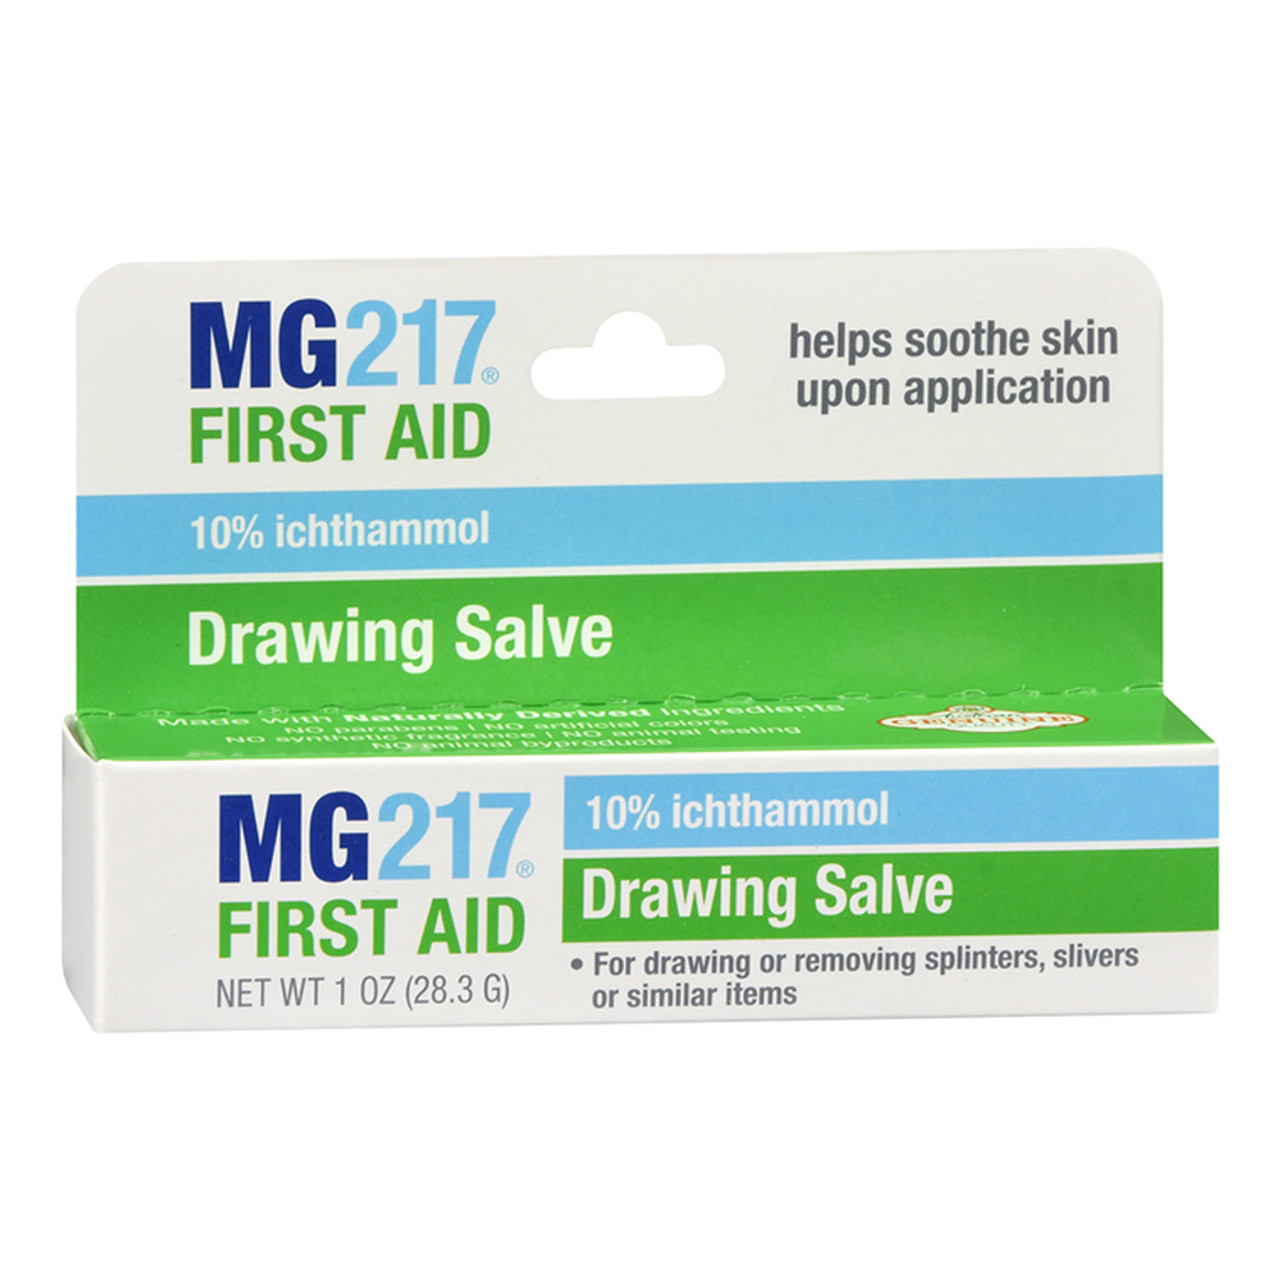 Mg217 First Aid 10% Ichthammol Drawing Salve for Splinter Removal, 1 oz